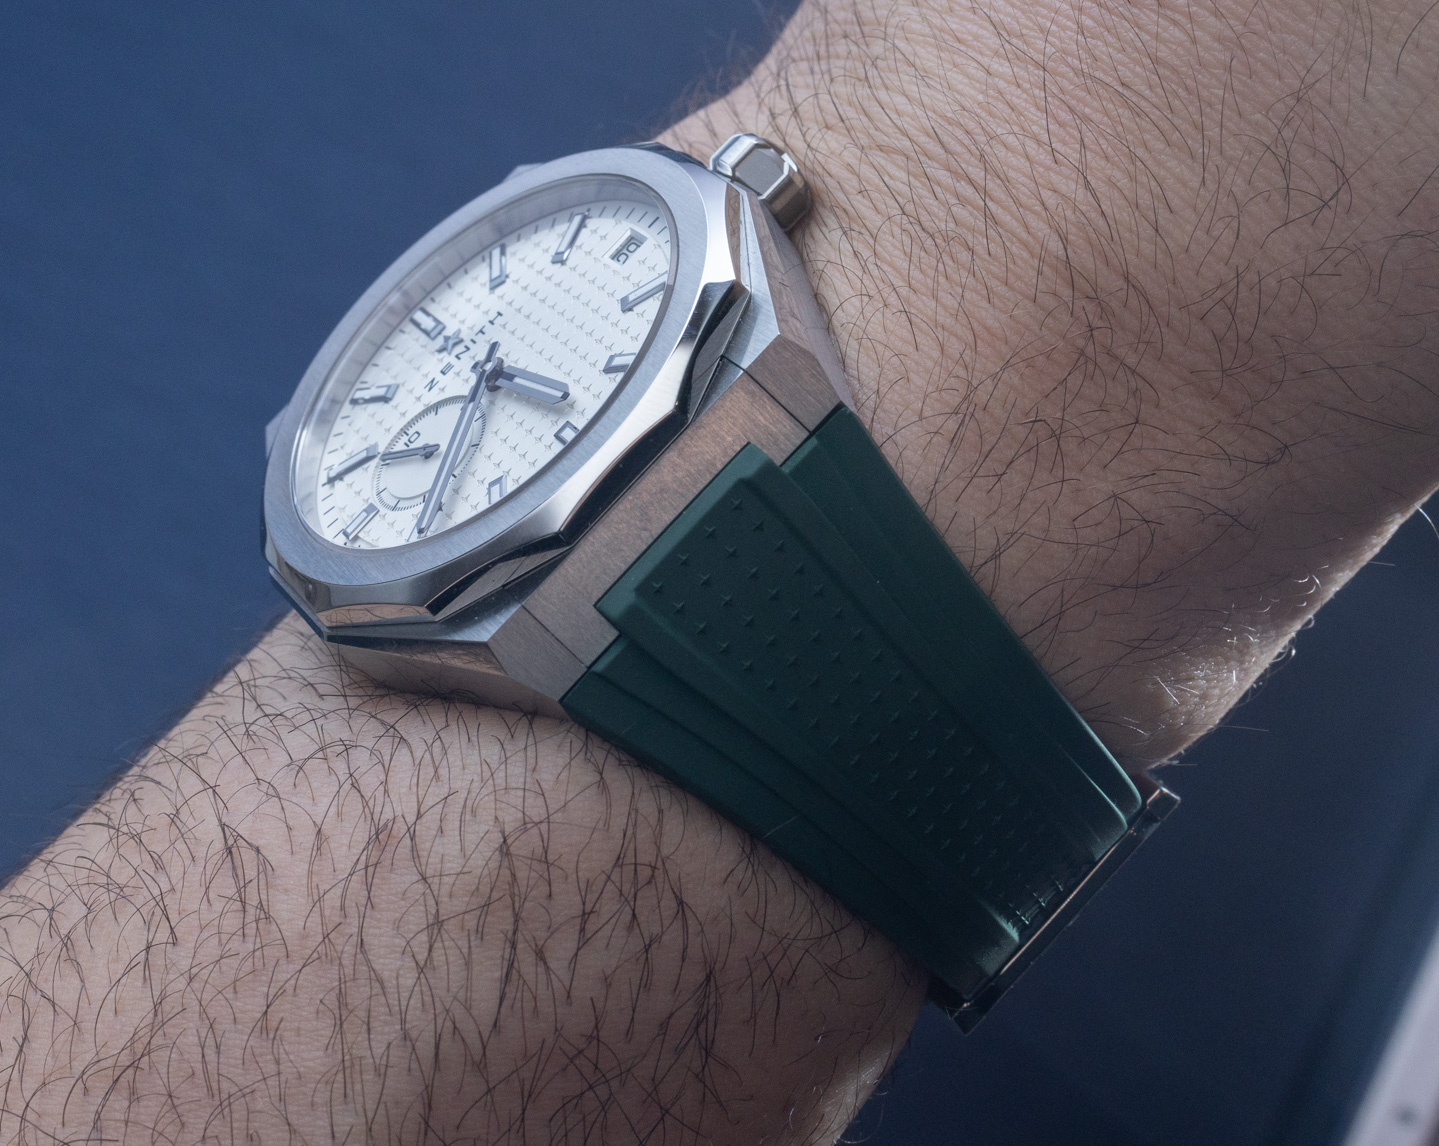 Zenith Expands Defy Skyline and Extreme – International Wristwatch